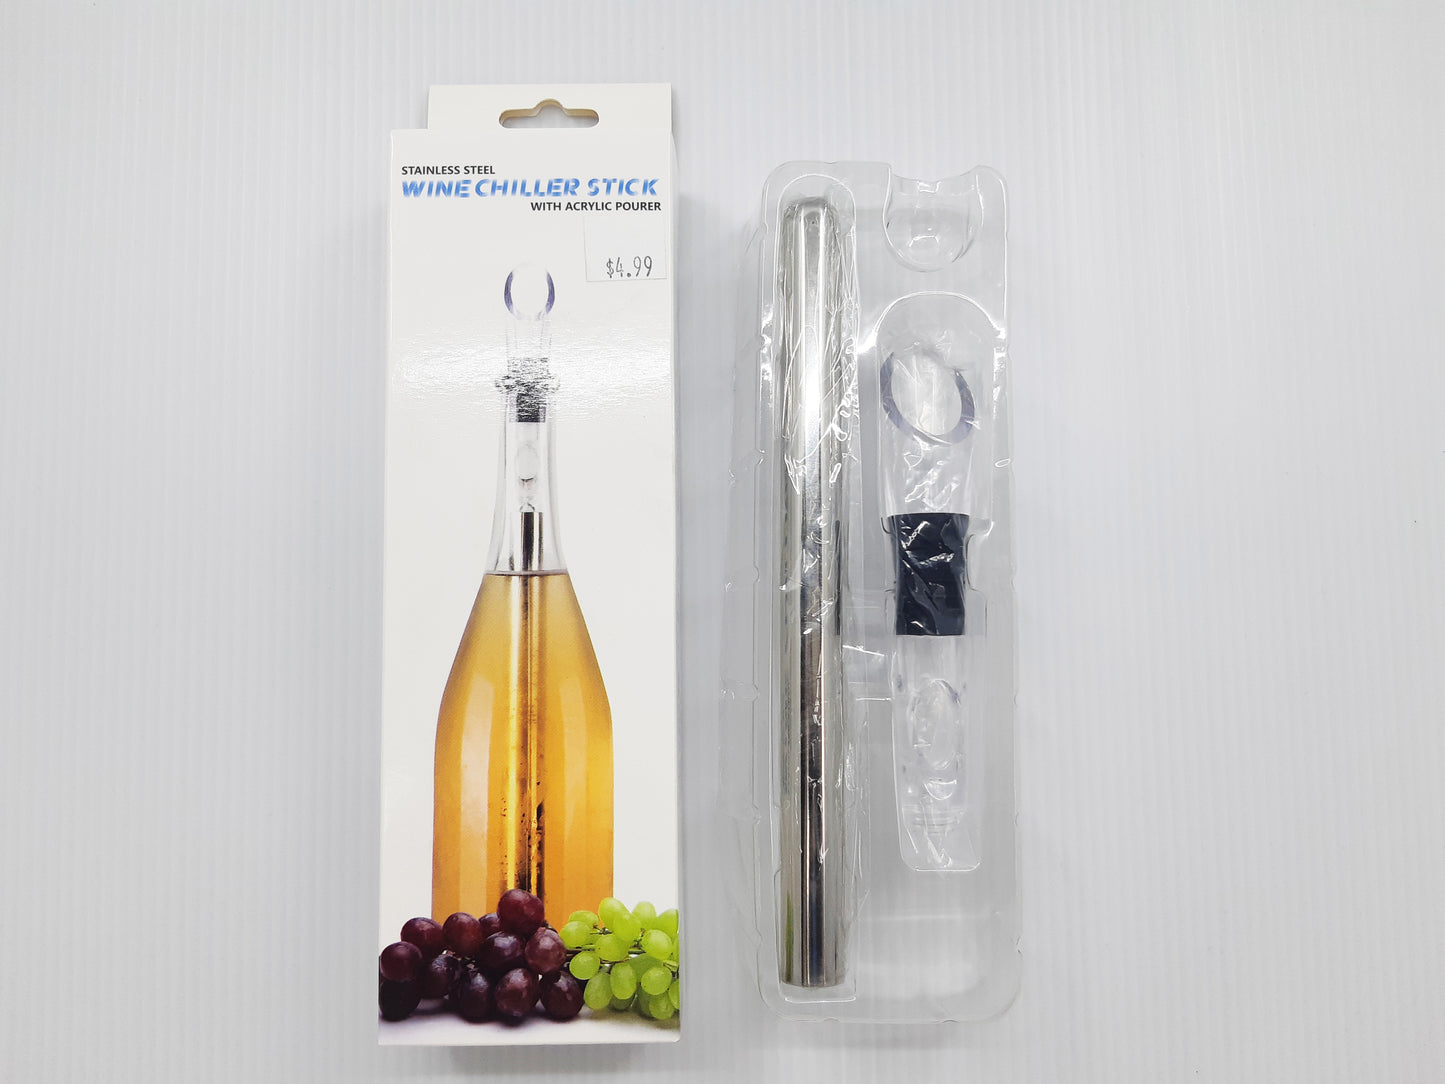 LFK-CR01 - Wine Chiller Stick